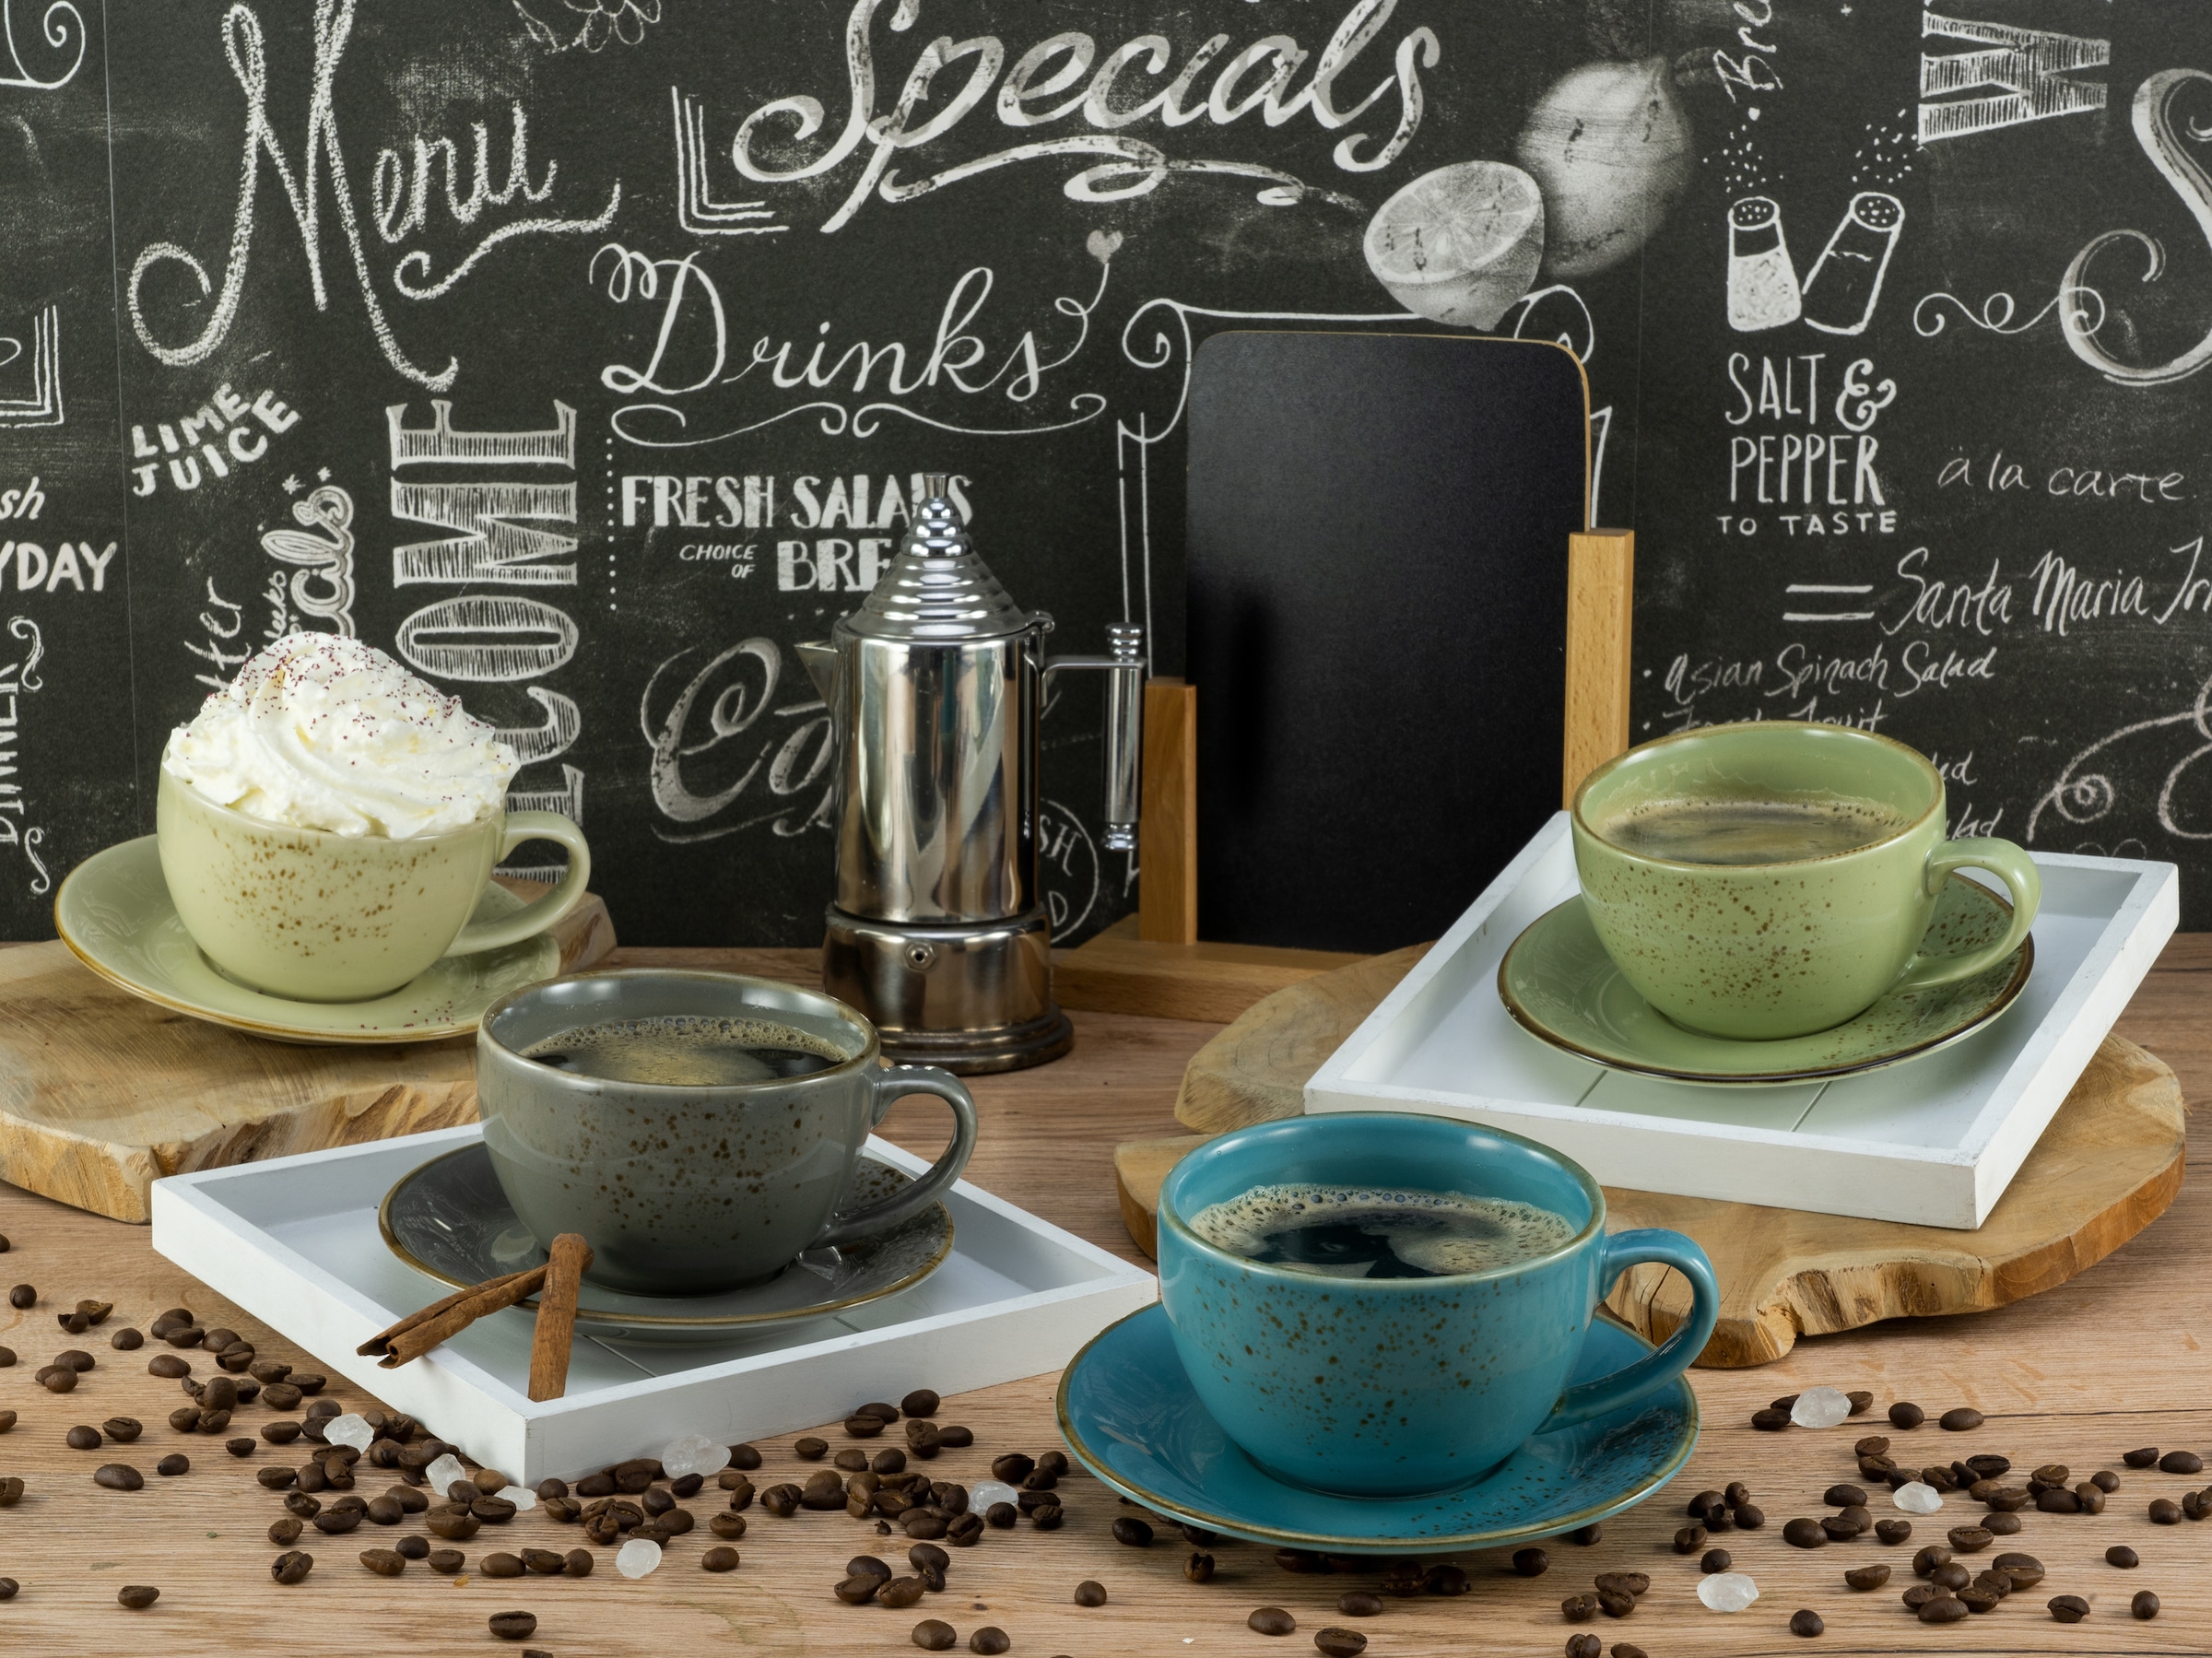 CreaTable Cappuccinotasse »Kaffeetasse NATURE COLLECTION«, (Set, 8 tlg.), Tassen Set, naturfarben mit Sprenkel, 4 Tassen, 4 Untertassen